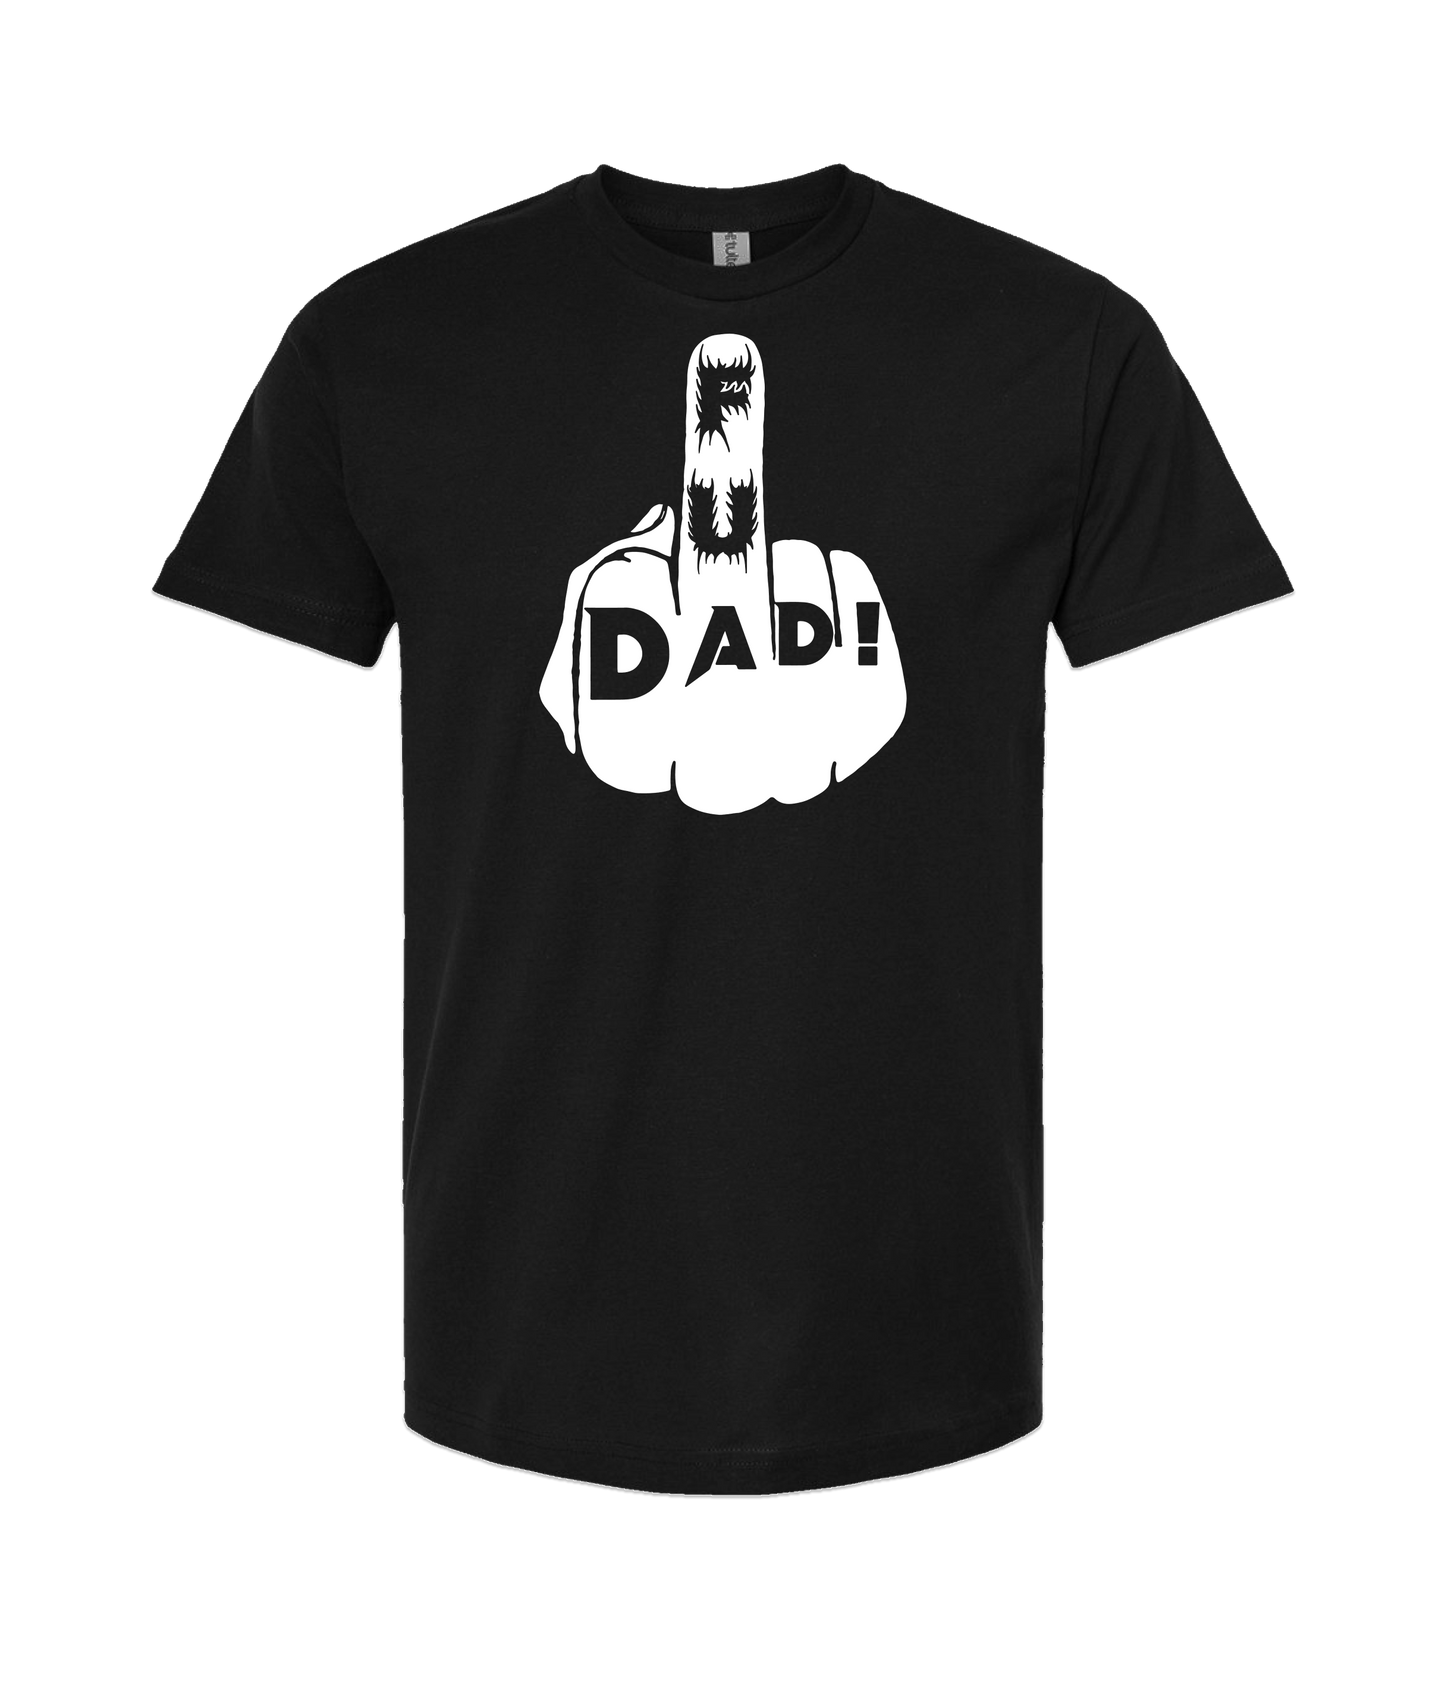 Realign - FU DAD - Black T-Shirt